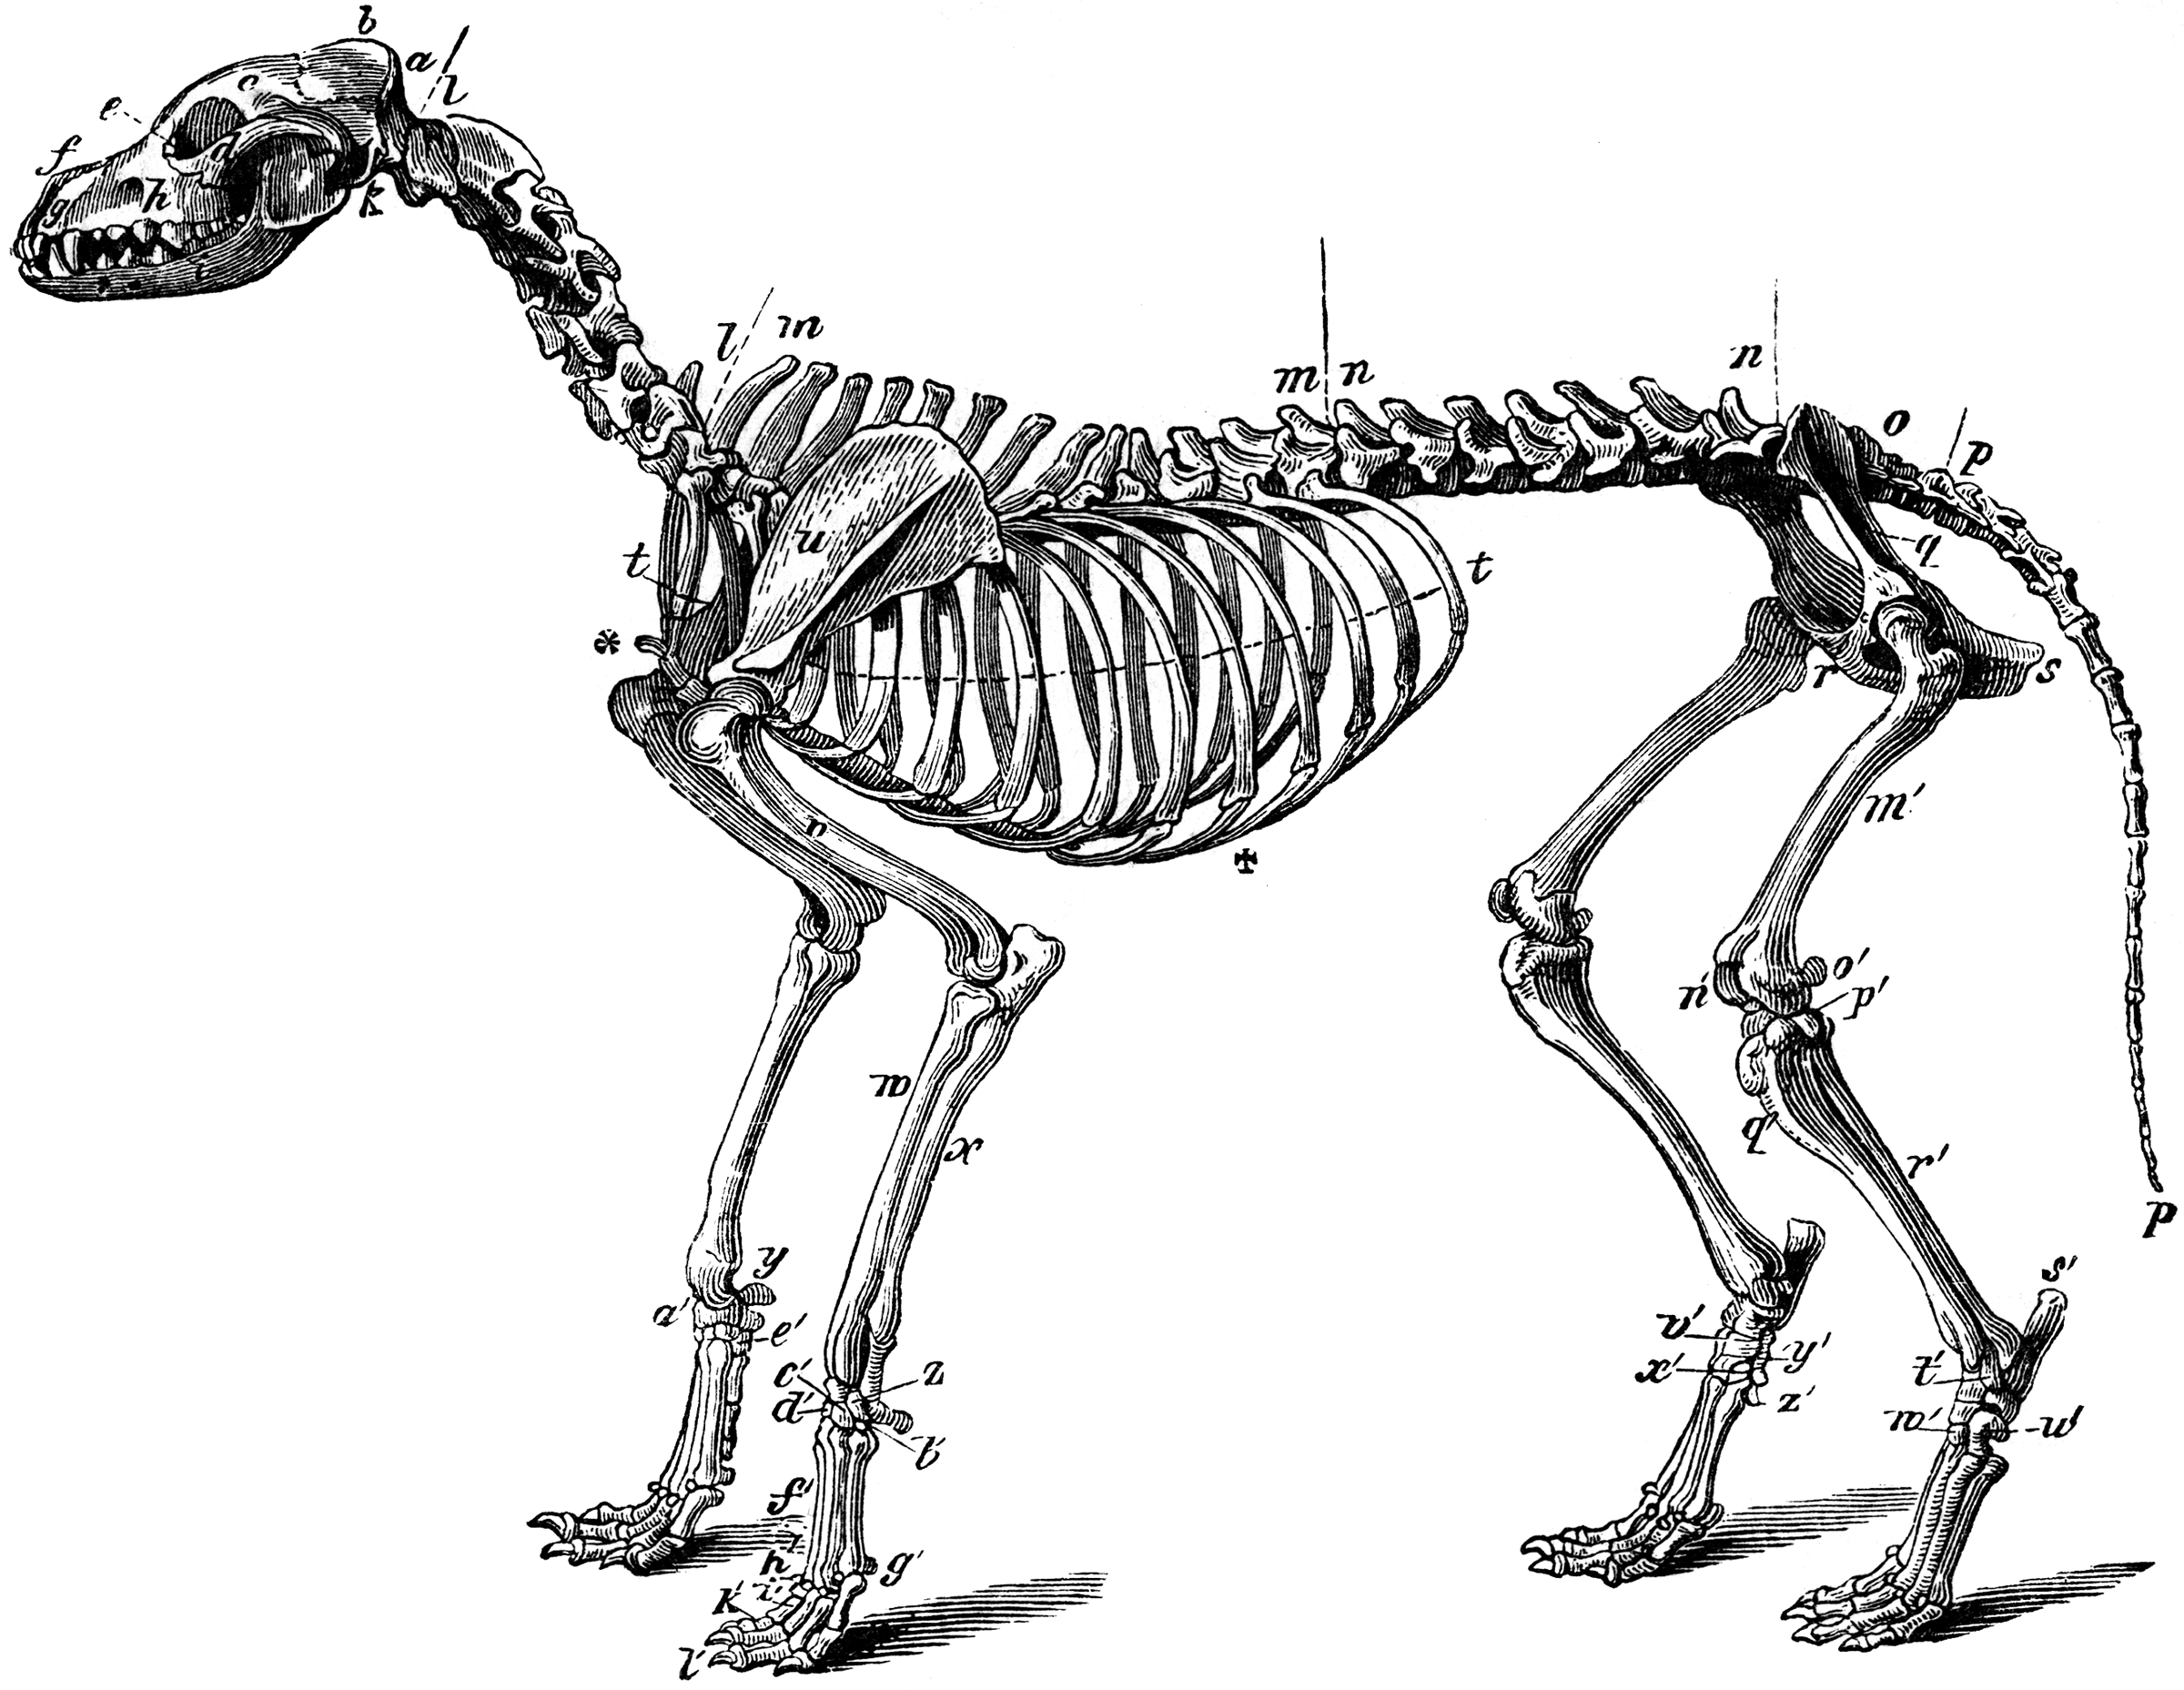 Skeleton of a Dog | ClipArt ETC